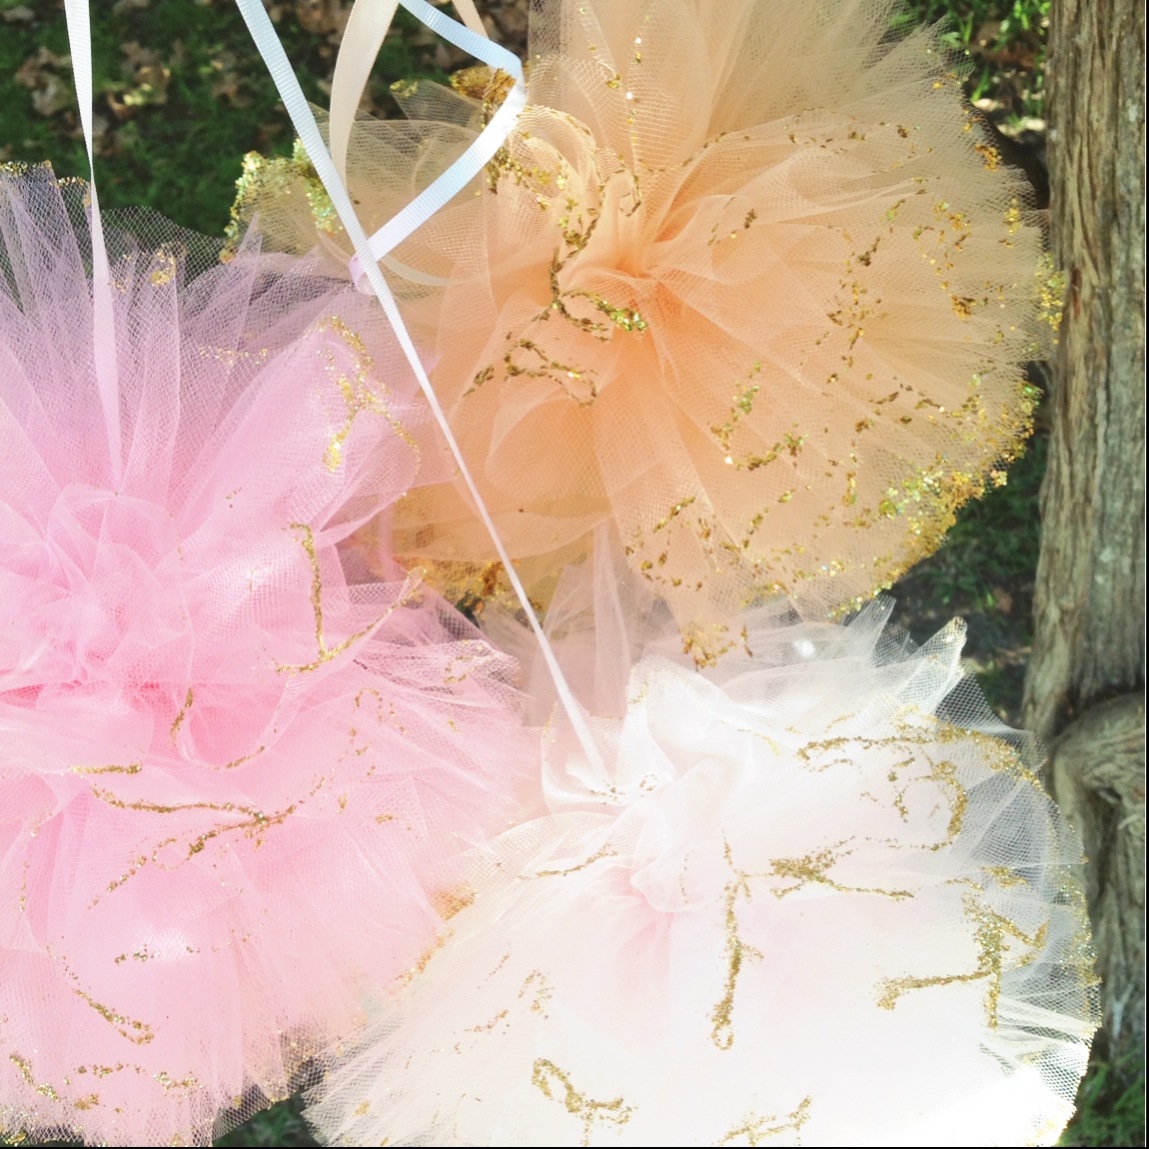 Pair of medium pink or peach tulle poms with glitter - Pom Pom Princess